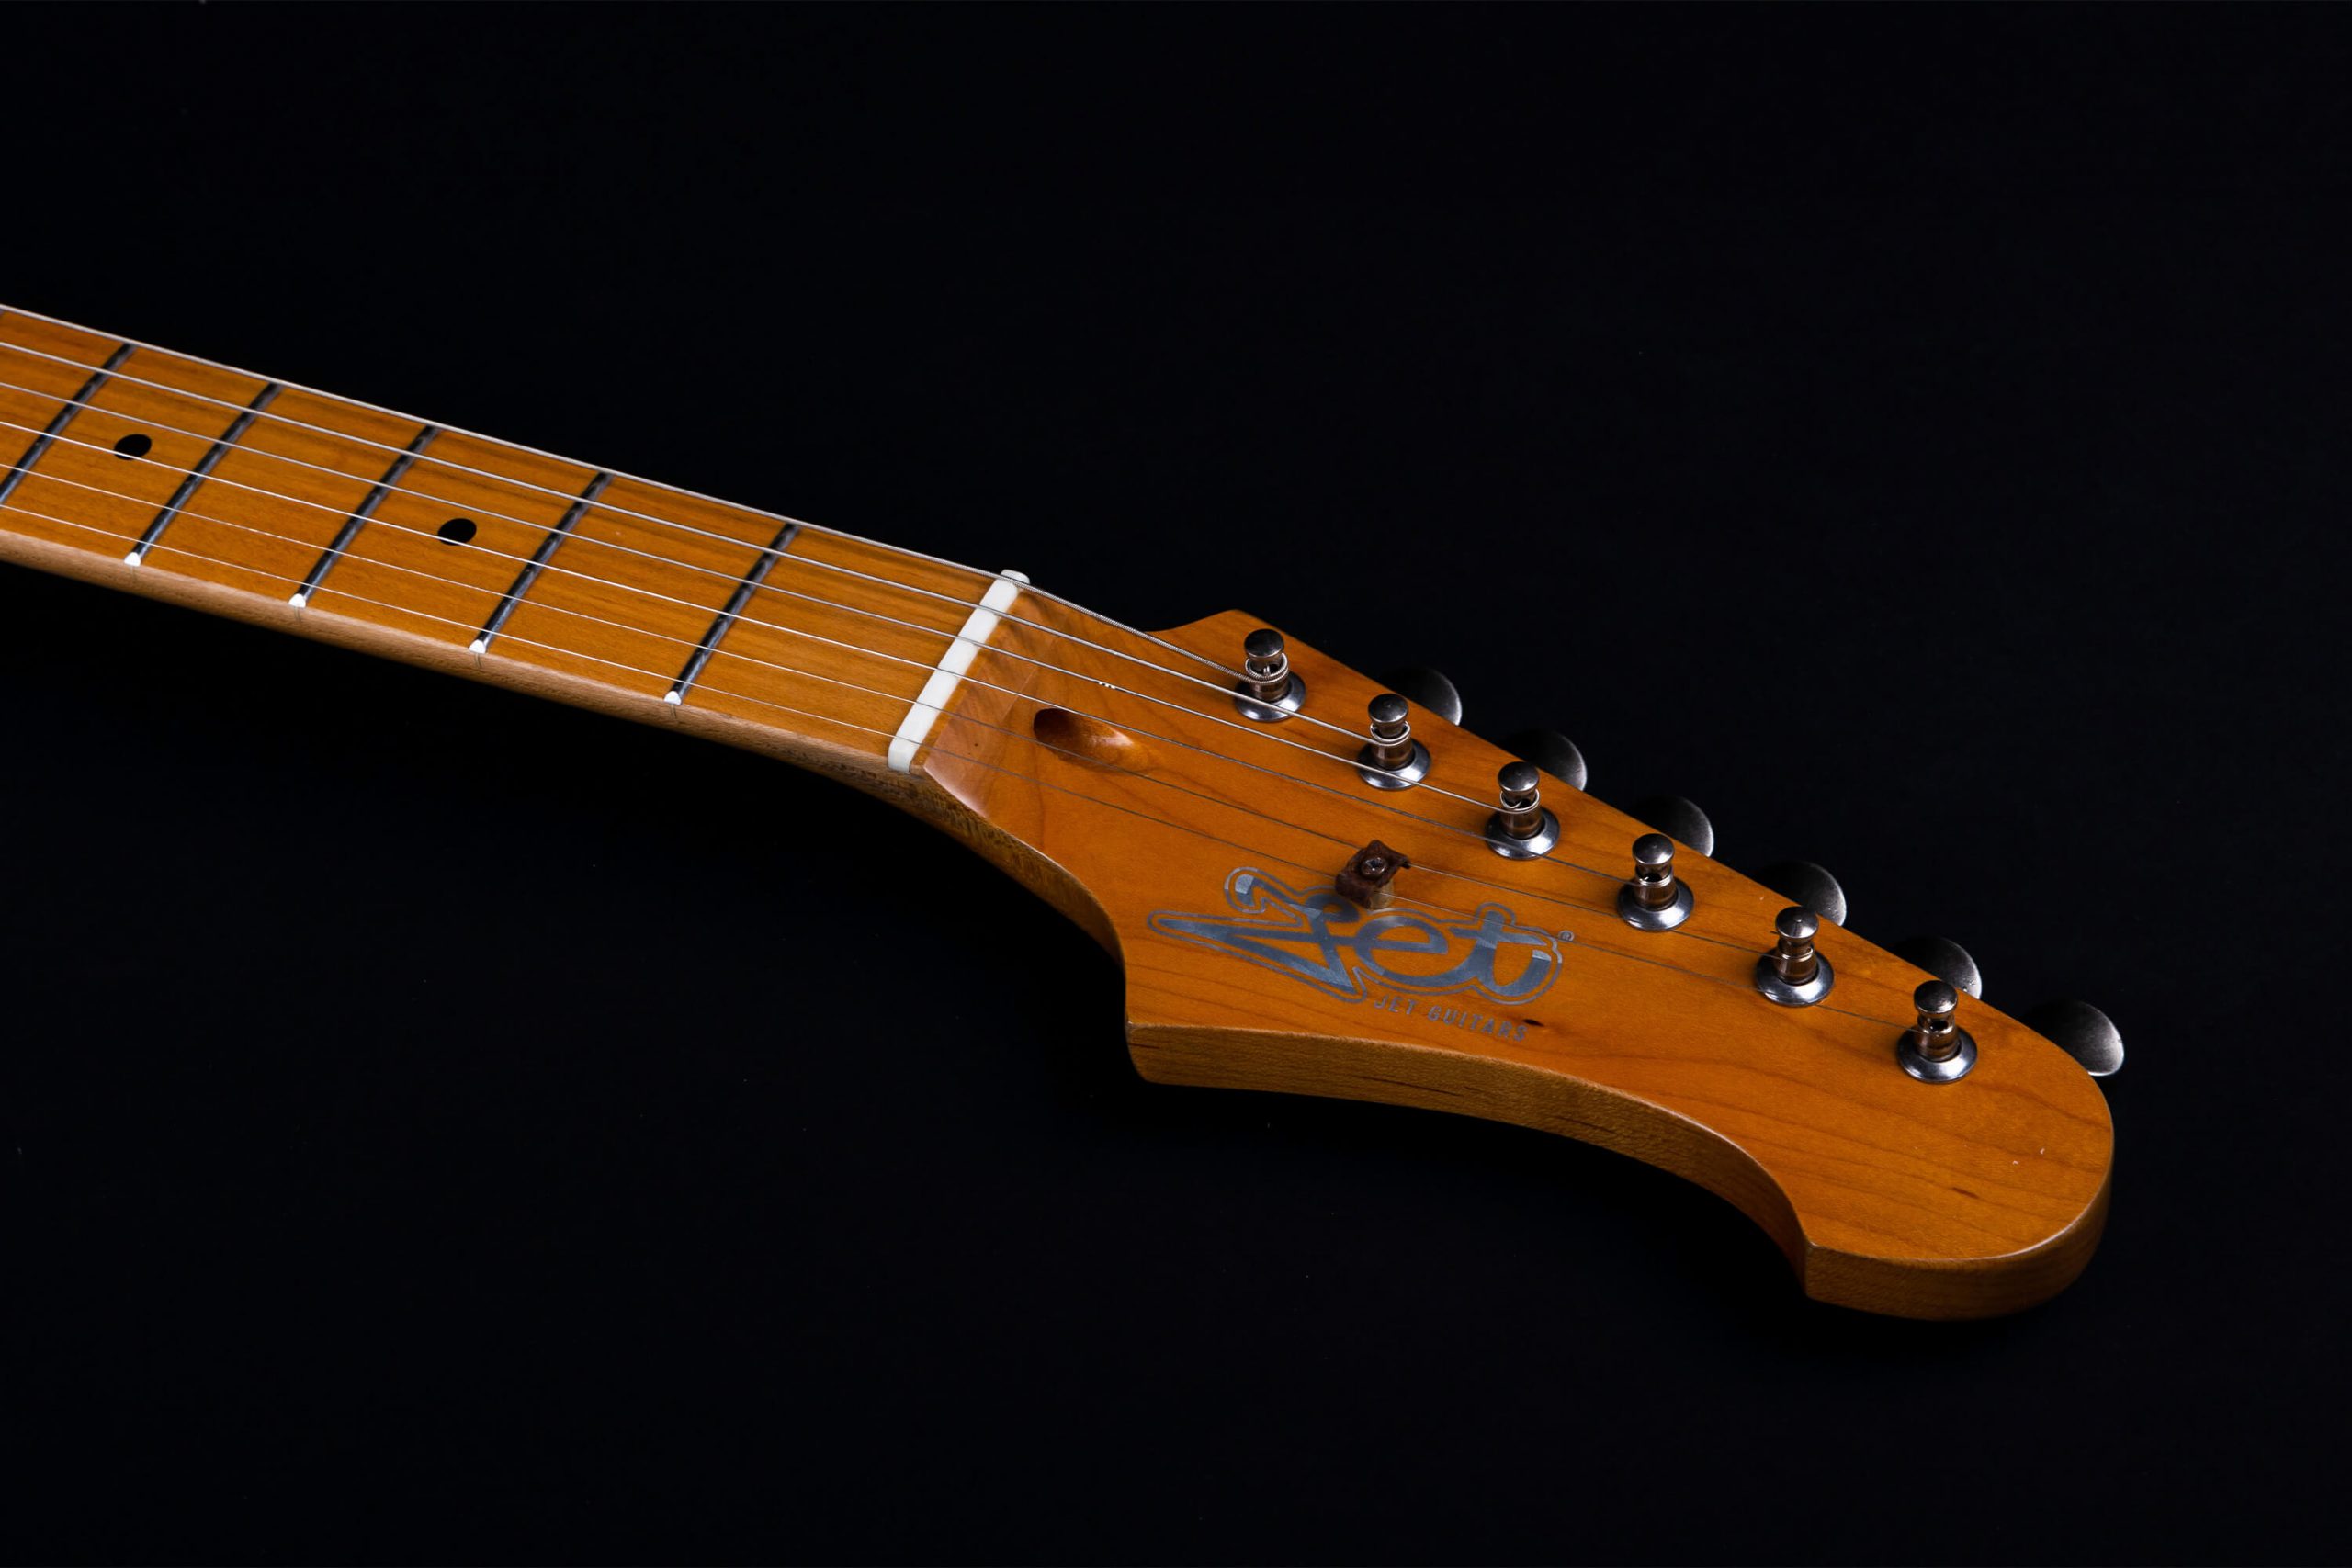 JET Guitars - JT 350 Series